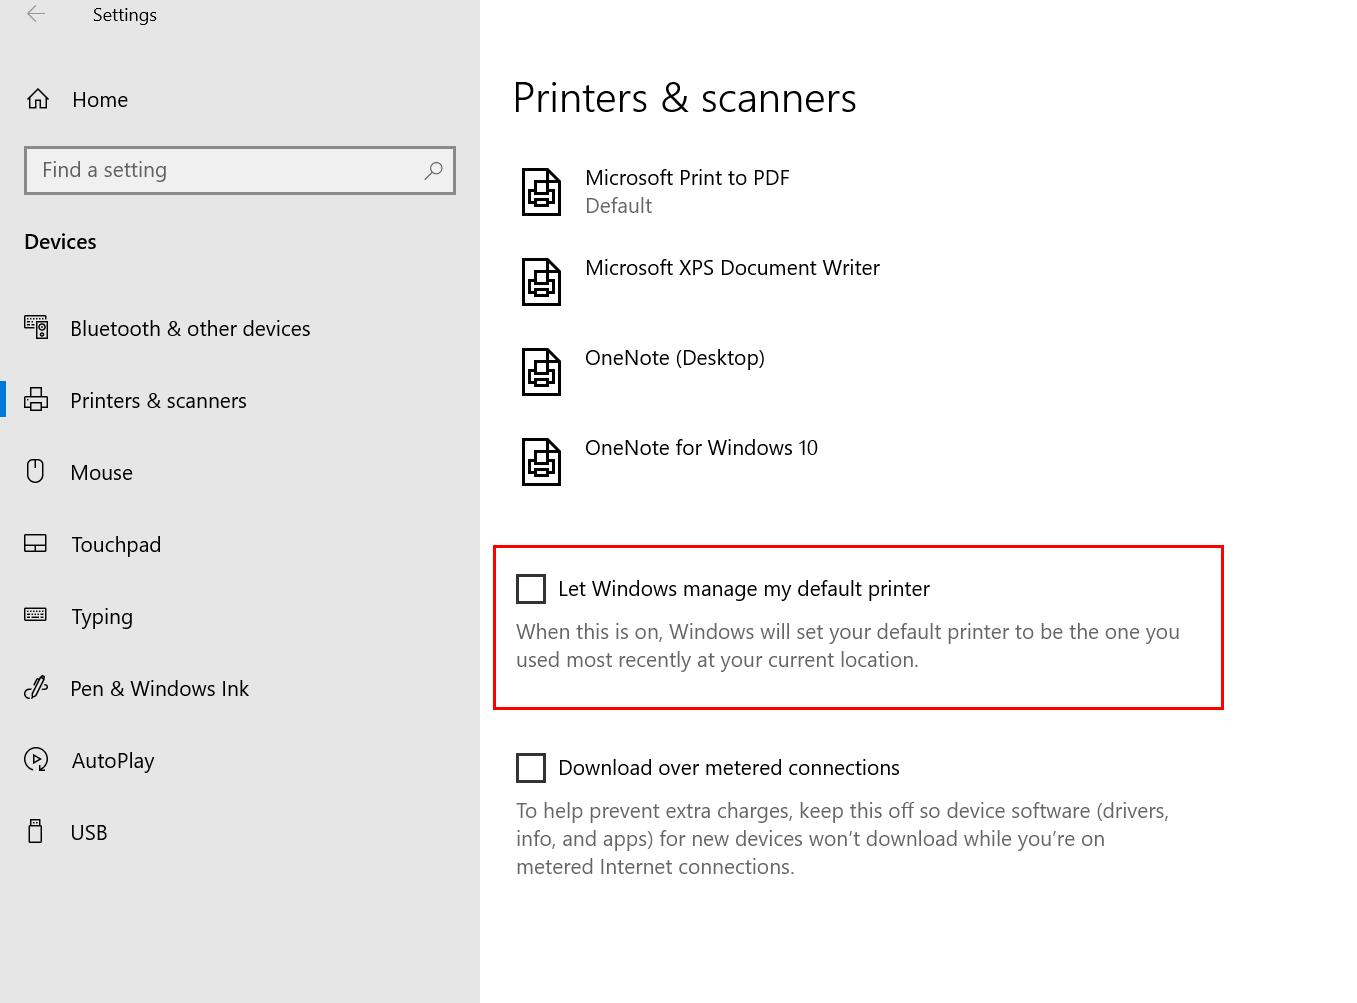 checkbox for LEt Windows manage Default Printer